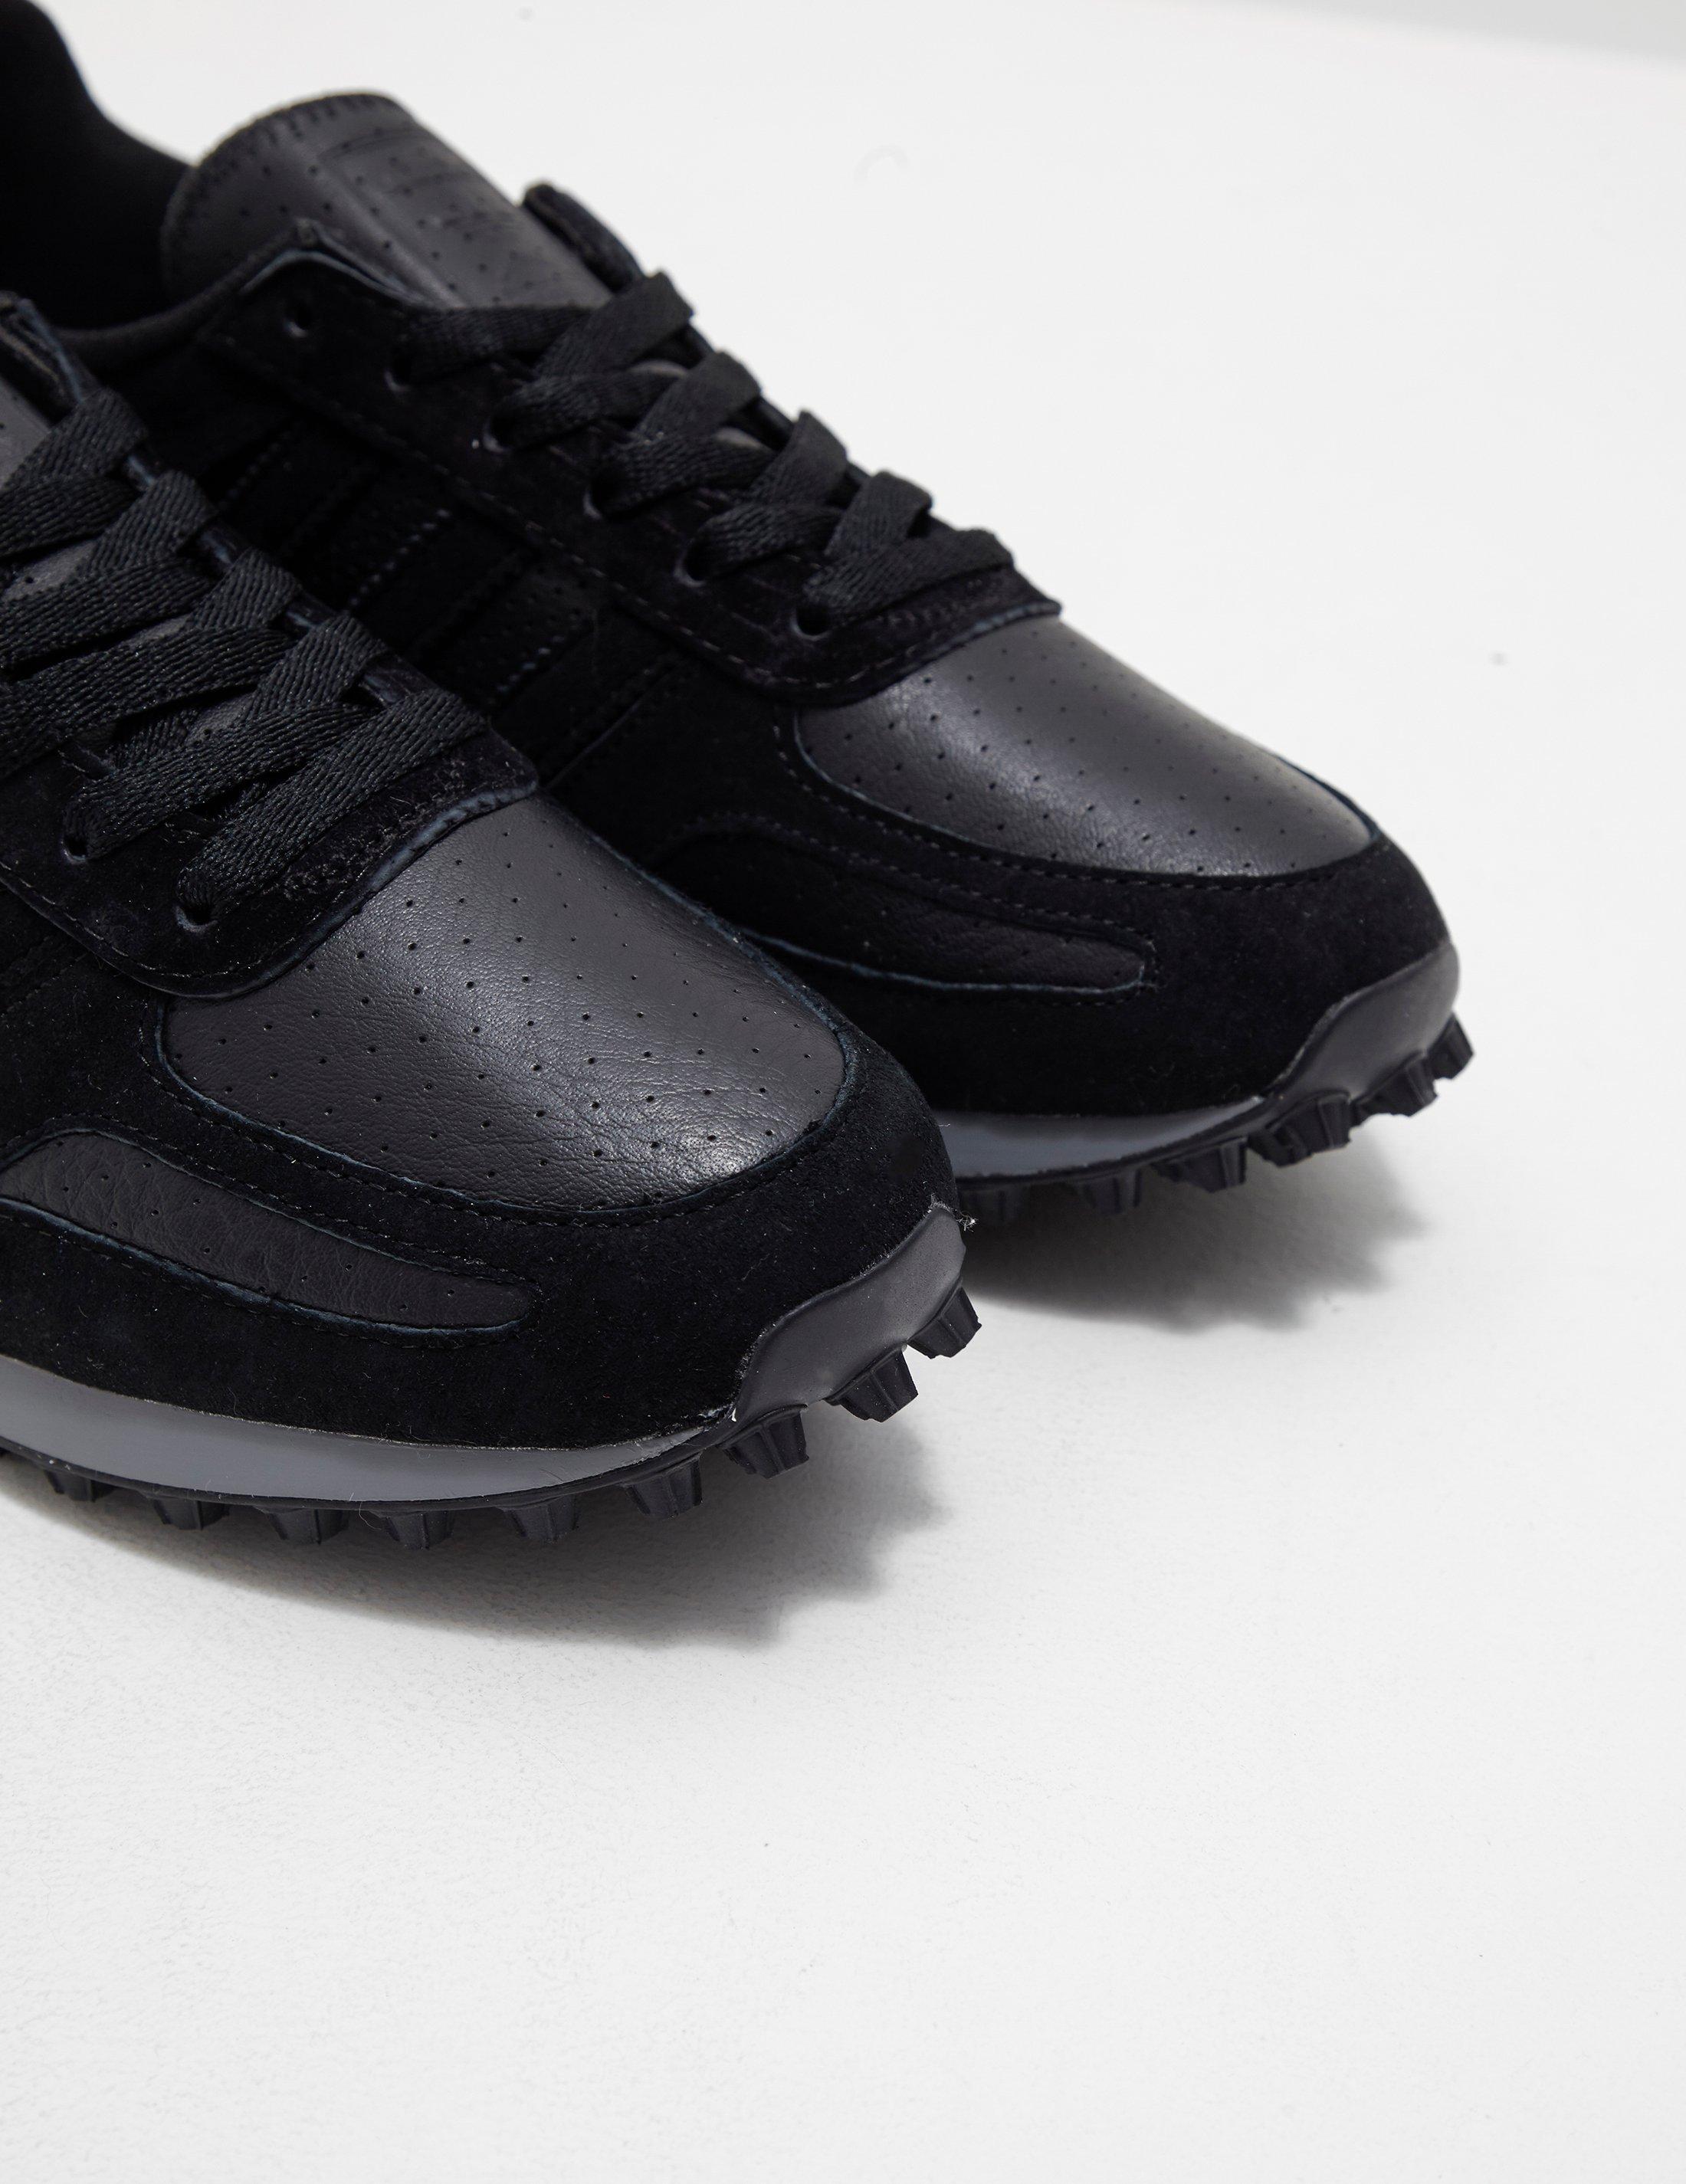 adidas Originals Mens La Trainer Leather Black/black for Men - Lyst